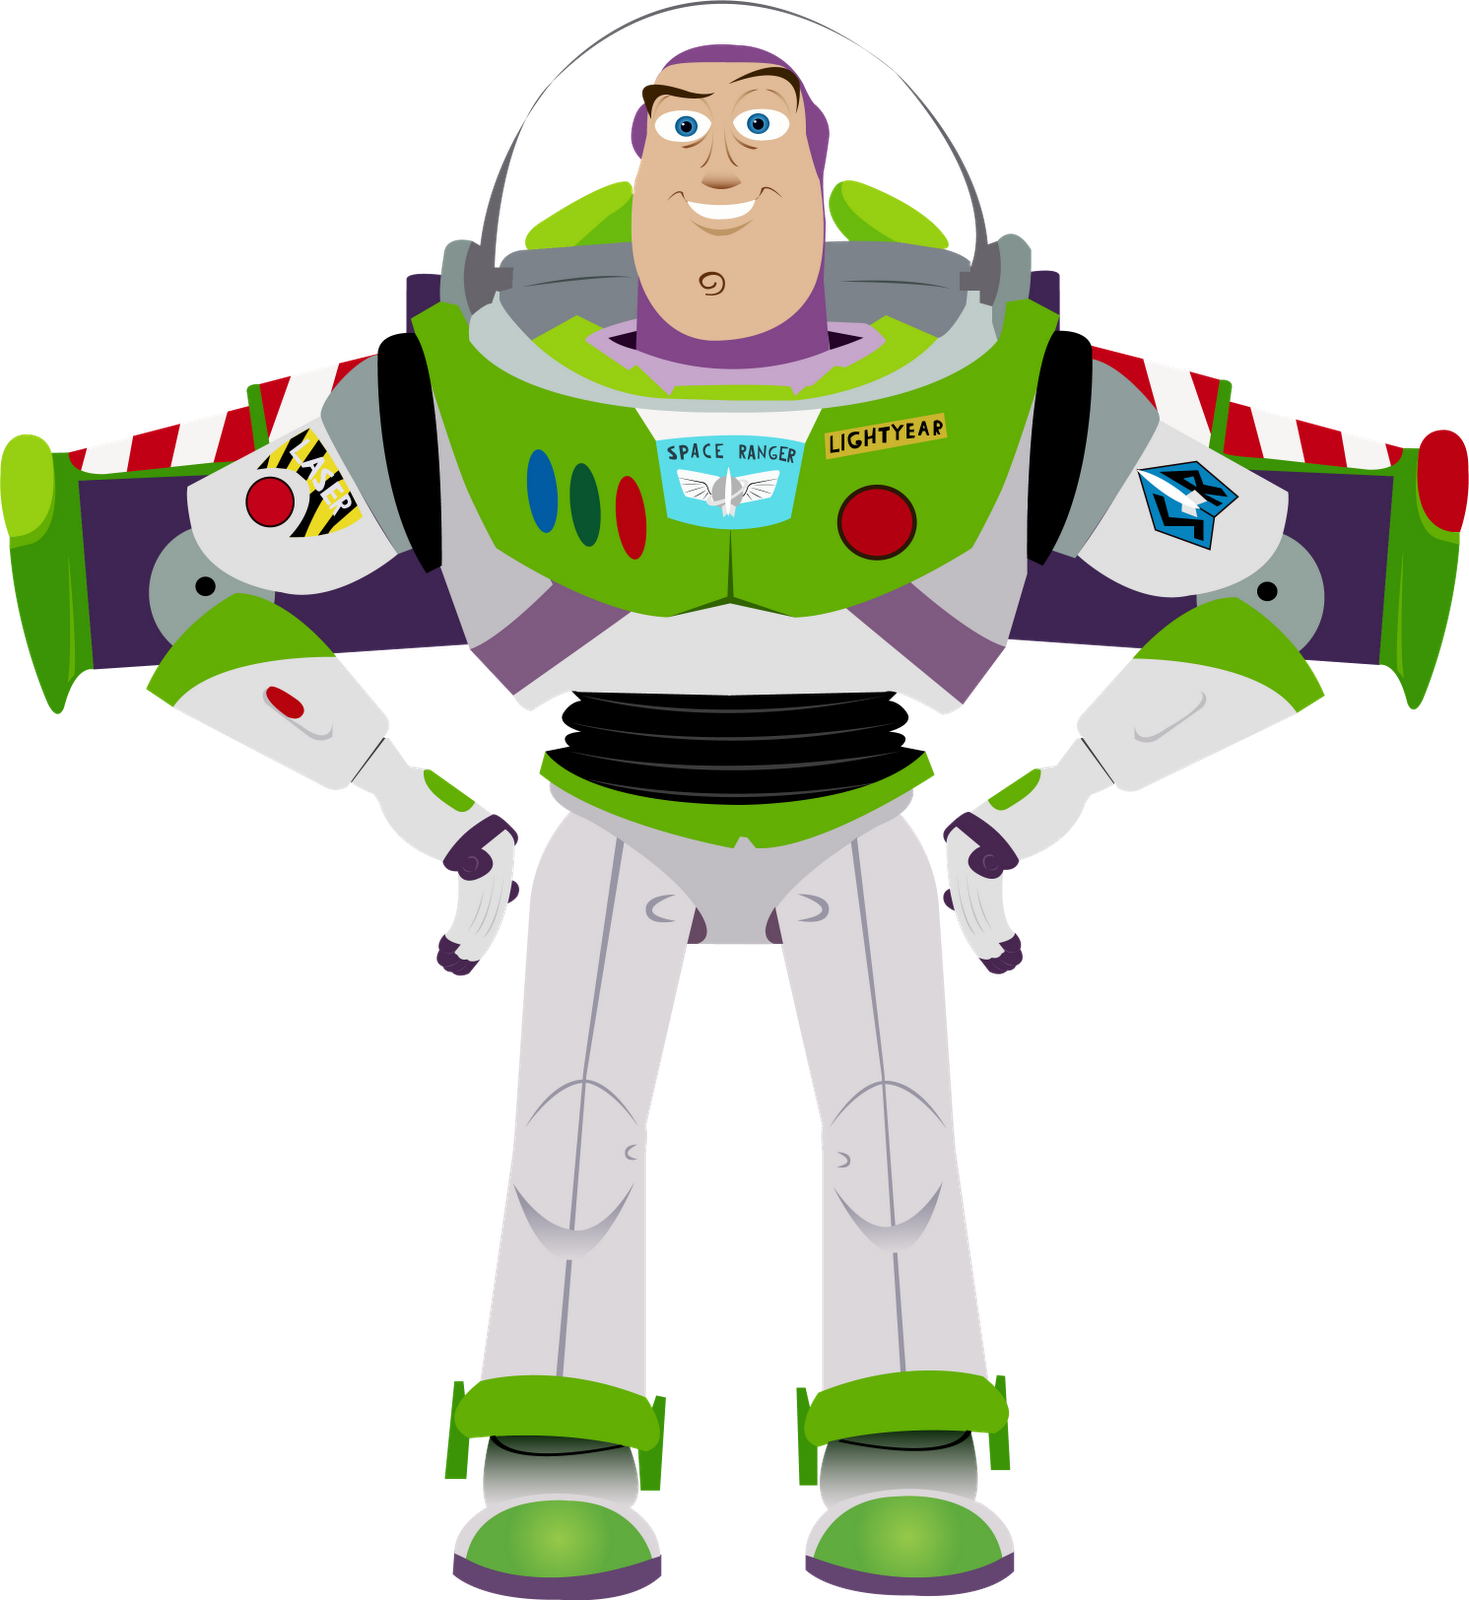 Buzz Lightyear พื้นหลังโปร่งใส